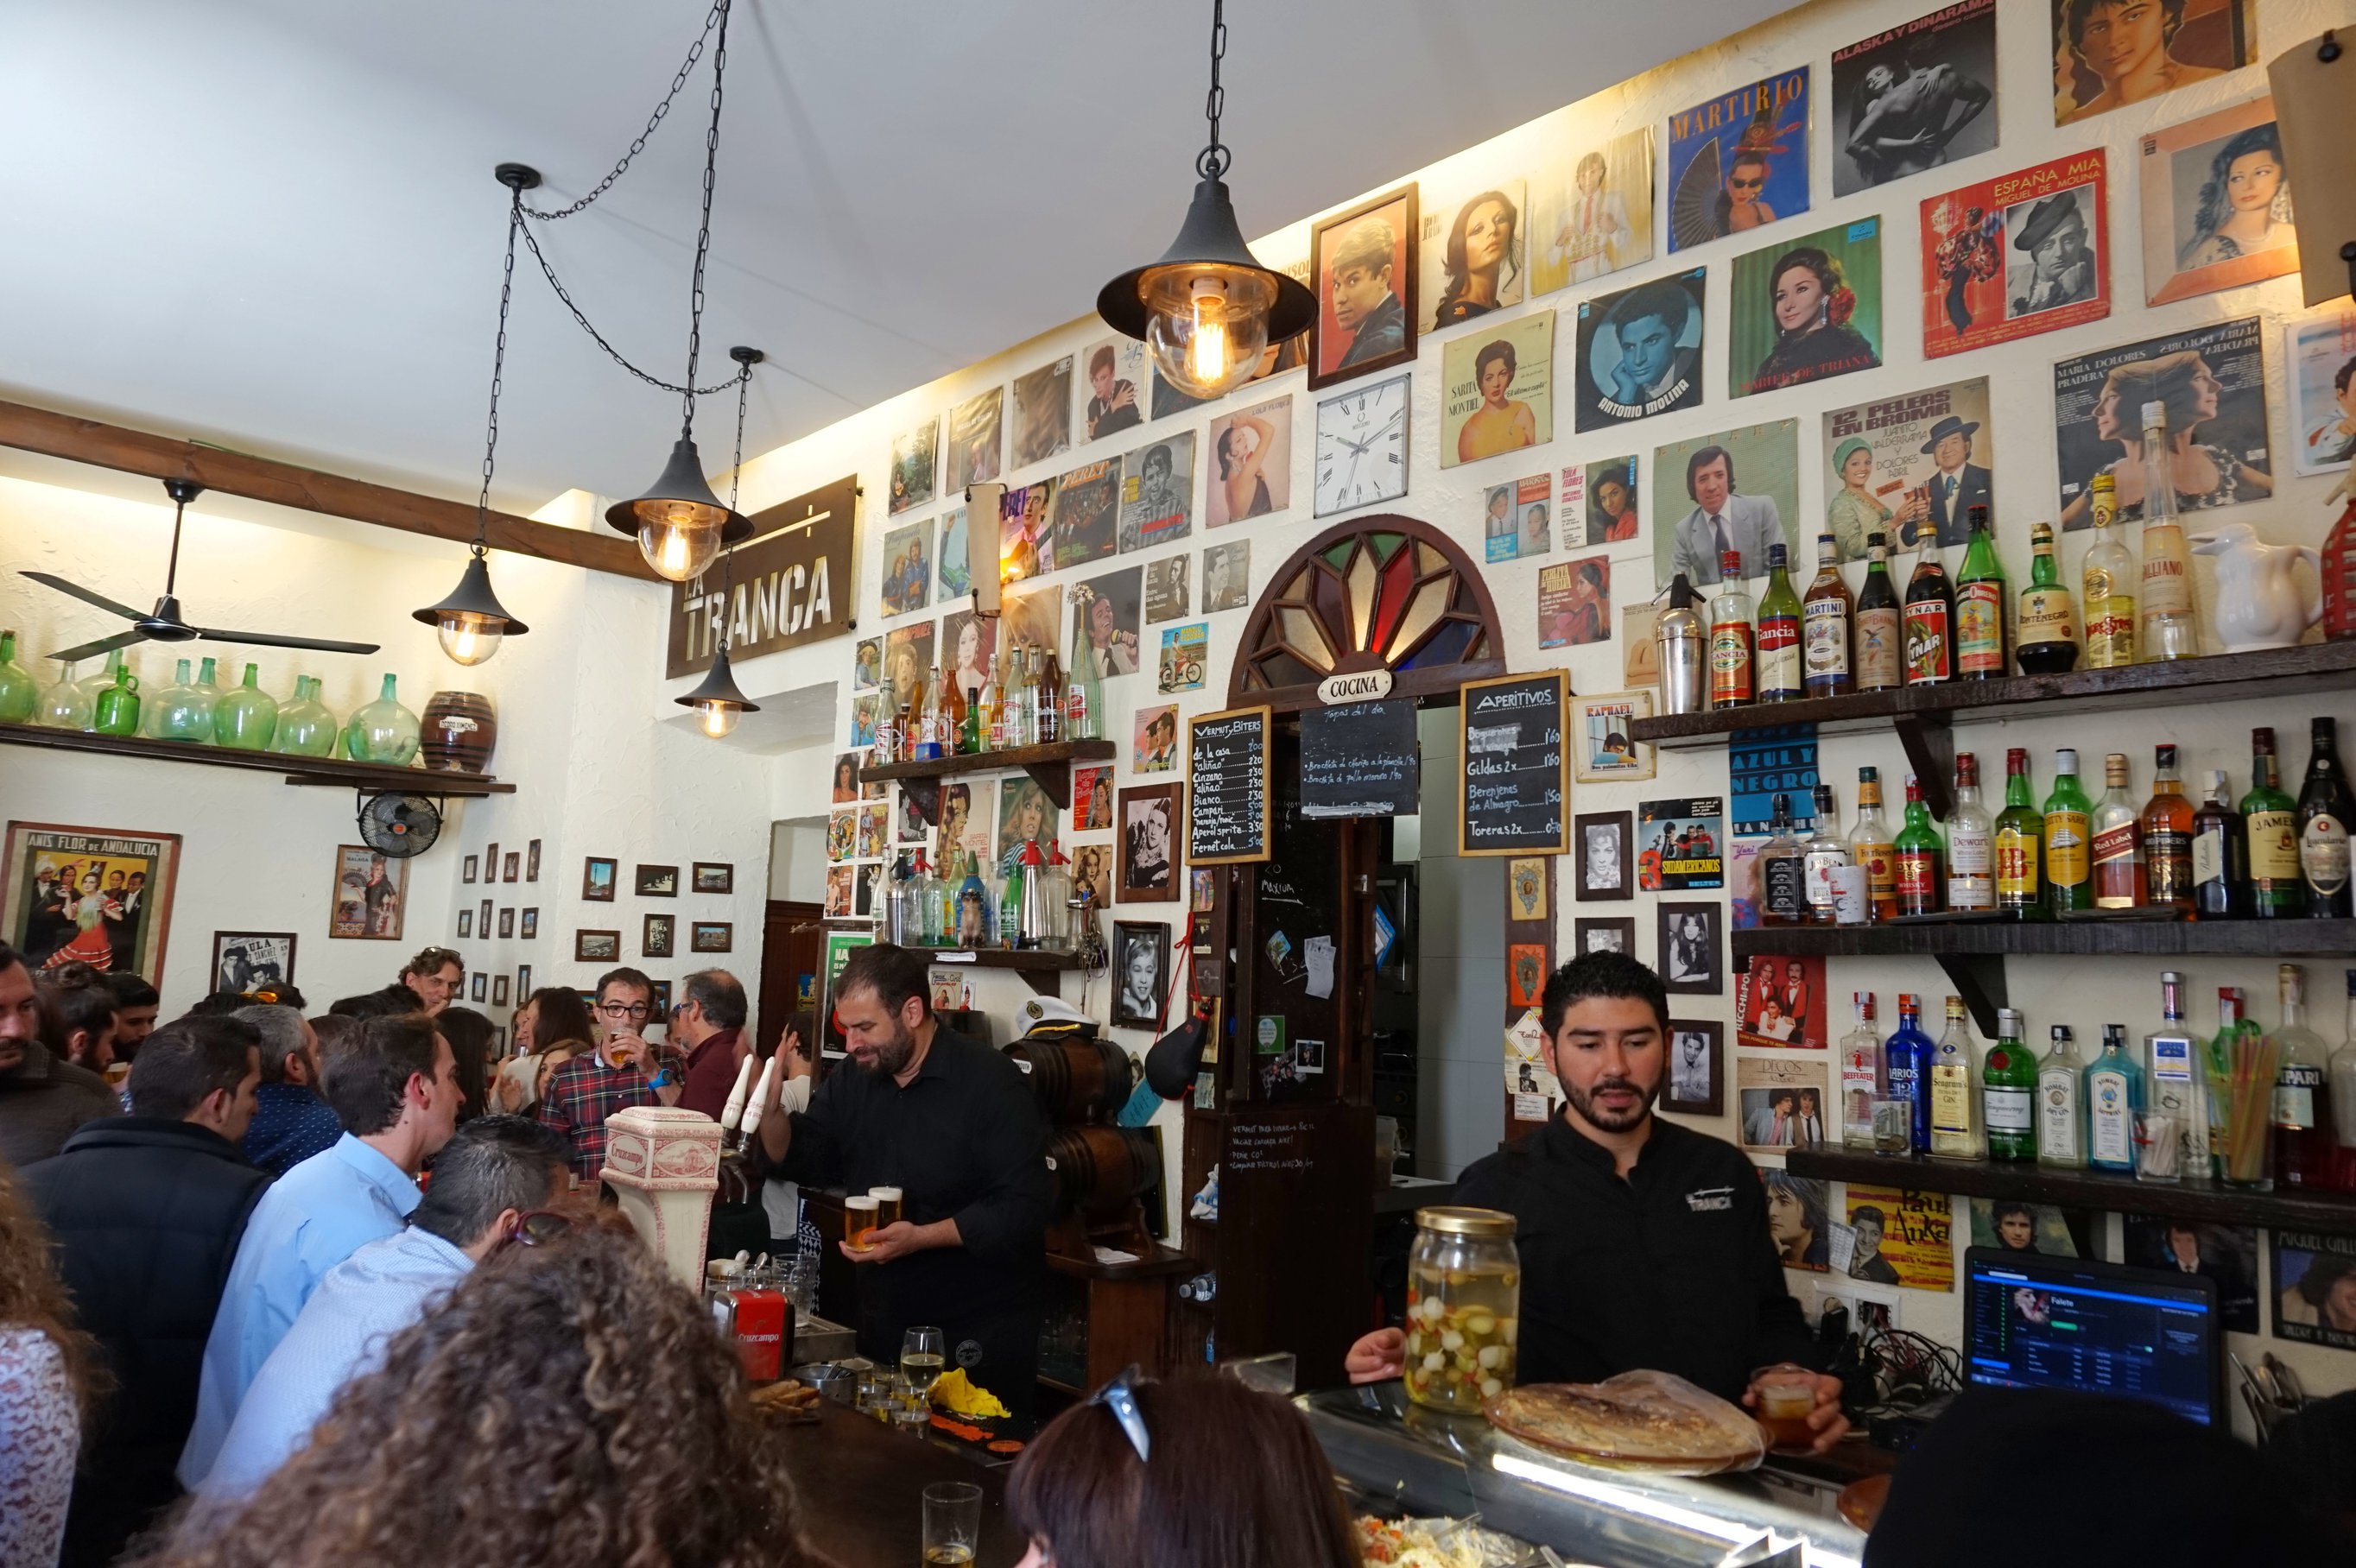 Ceder el paso sed penitencia The Best Bars in Malaga, Spain